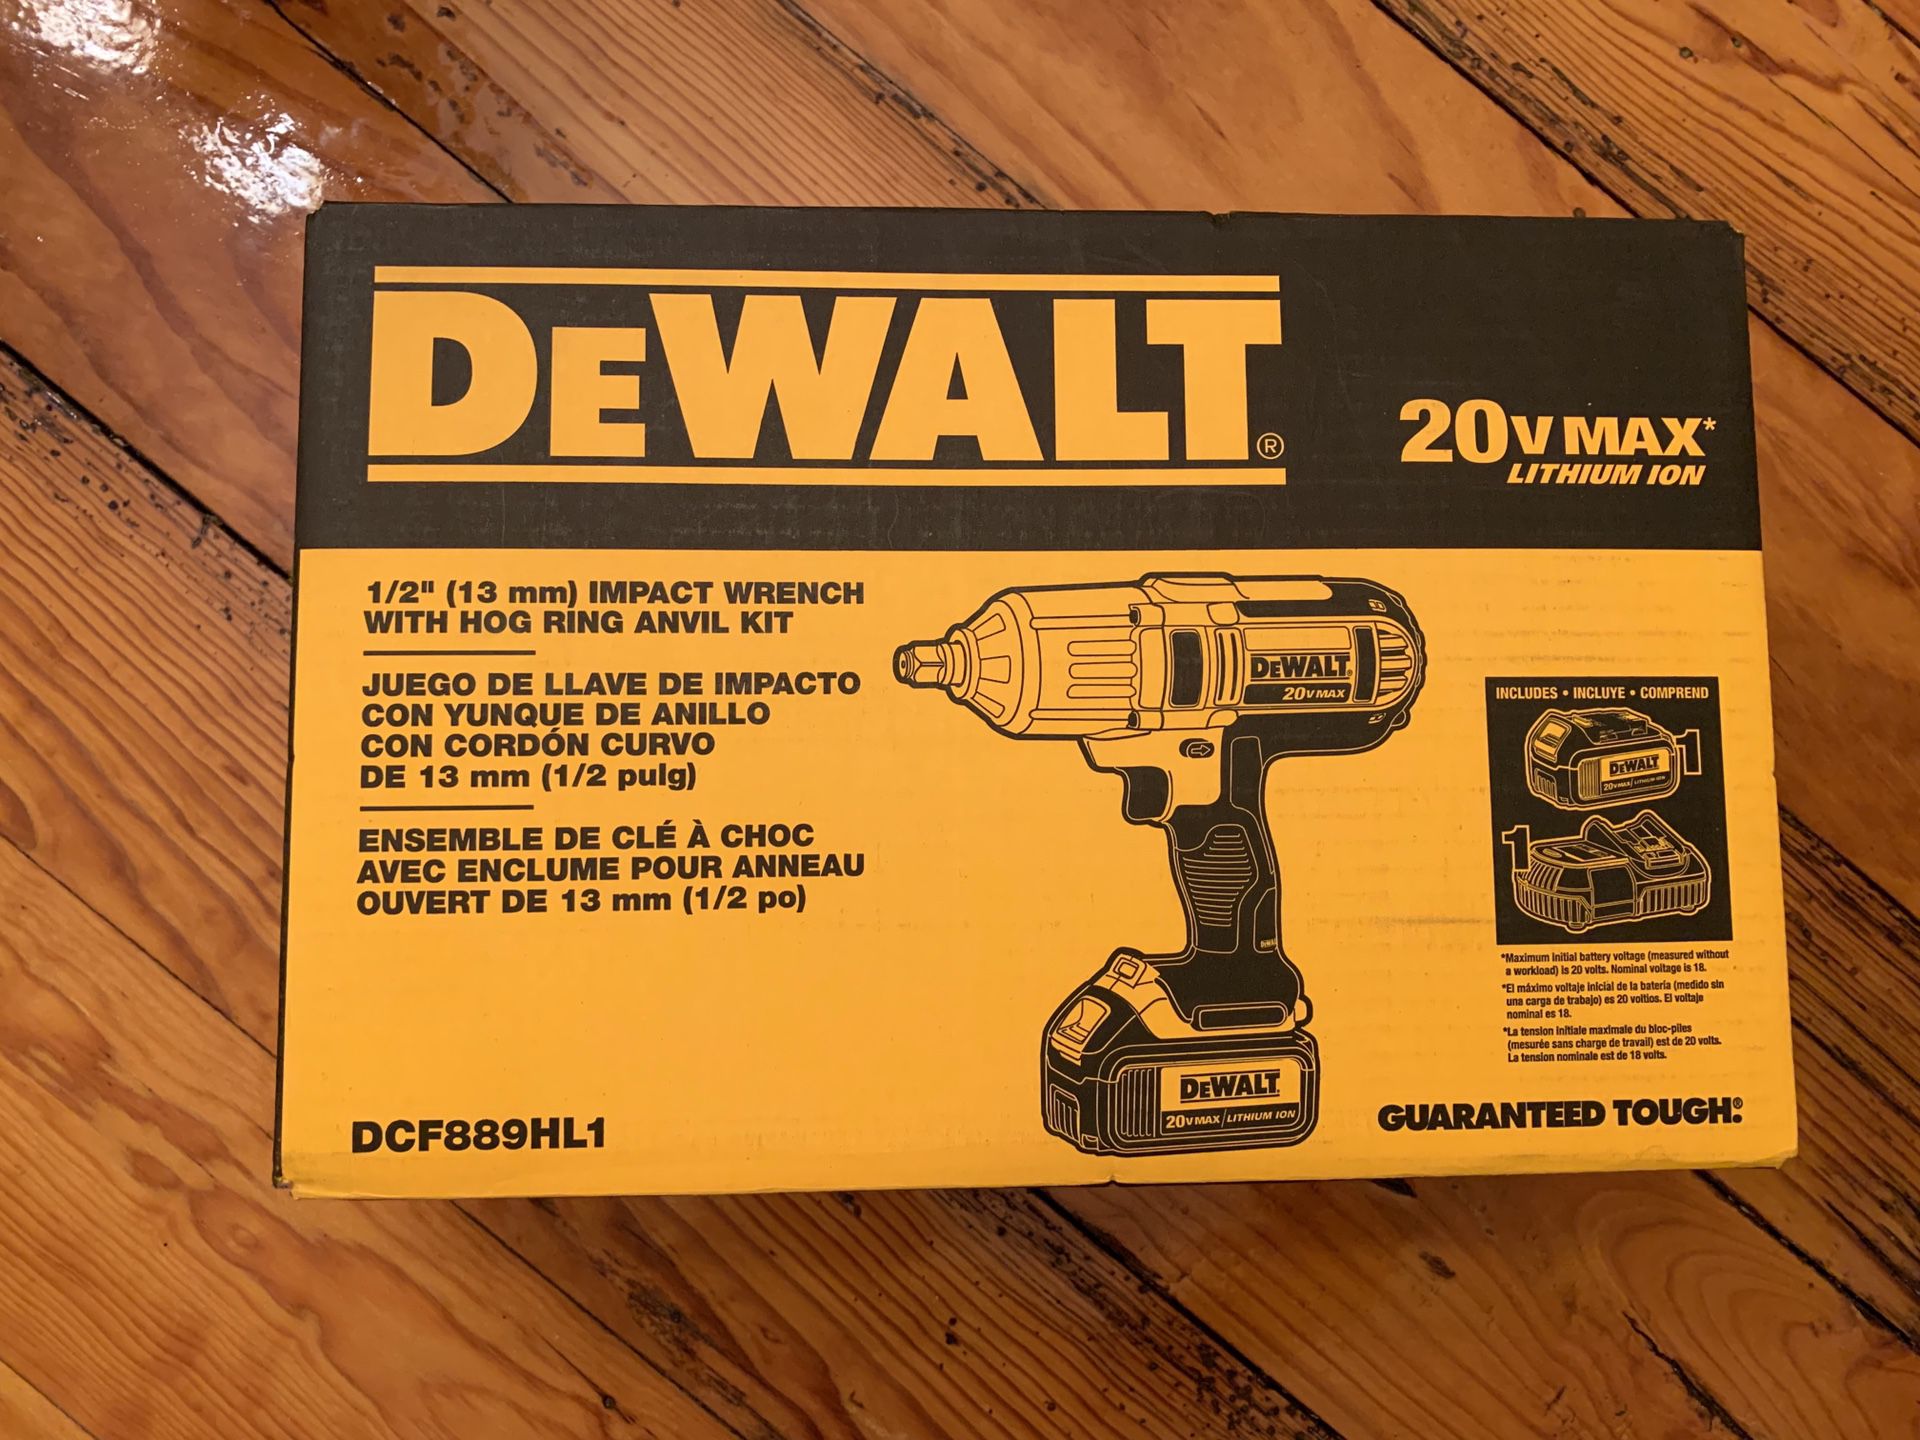 Brand New DeWalt 1/2” (13mm) Impact Wrench with Hog Ring Anvil Kit - Model DCF889HL1